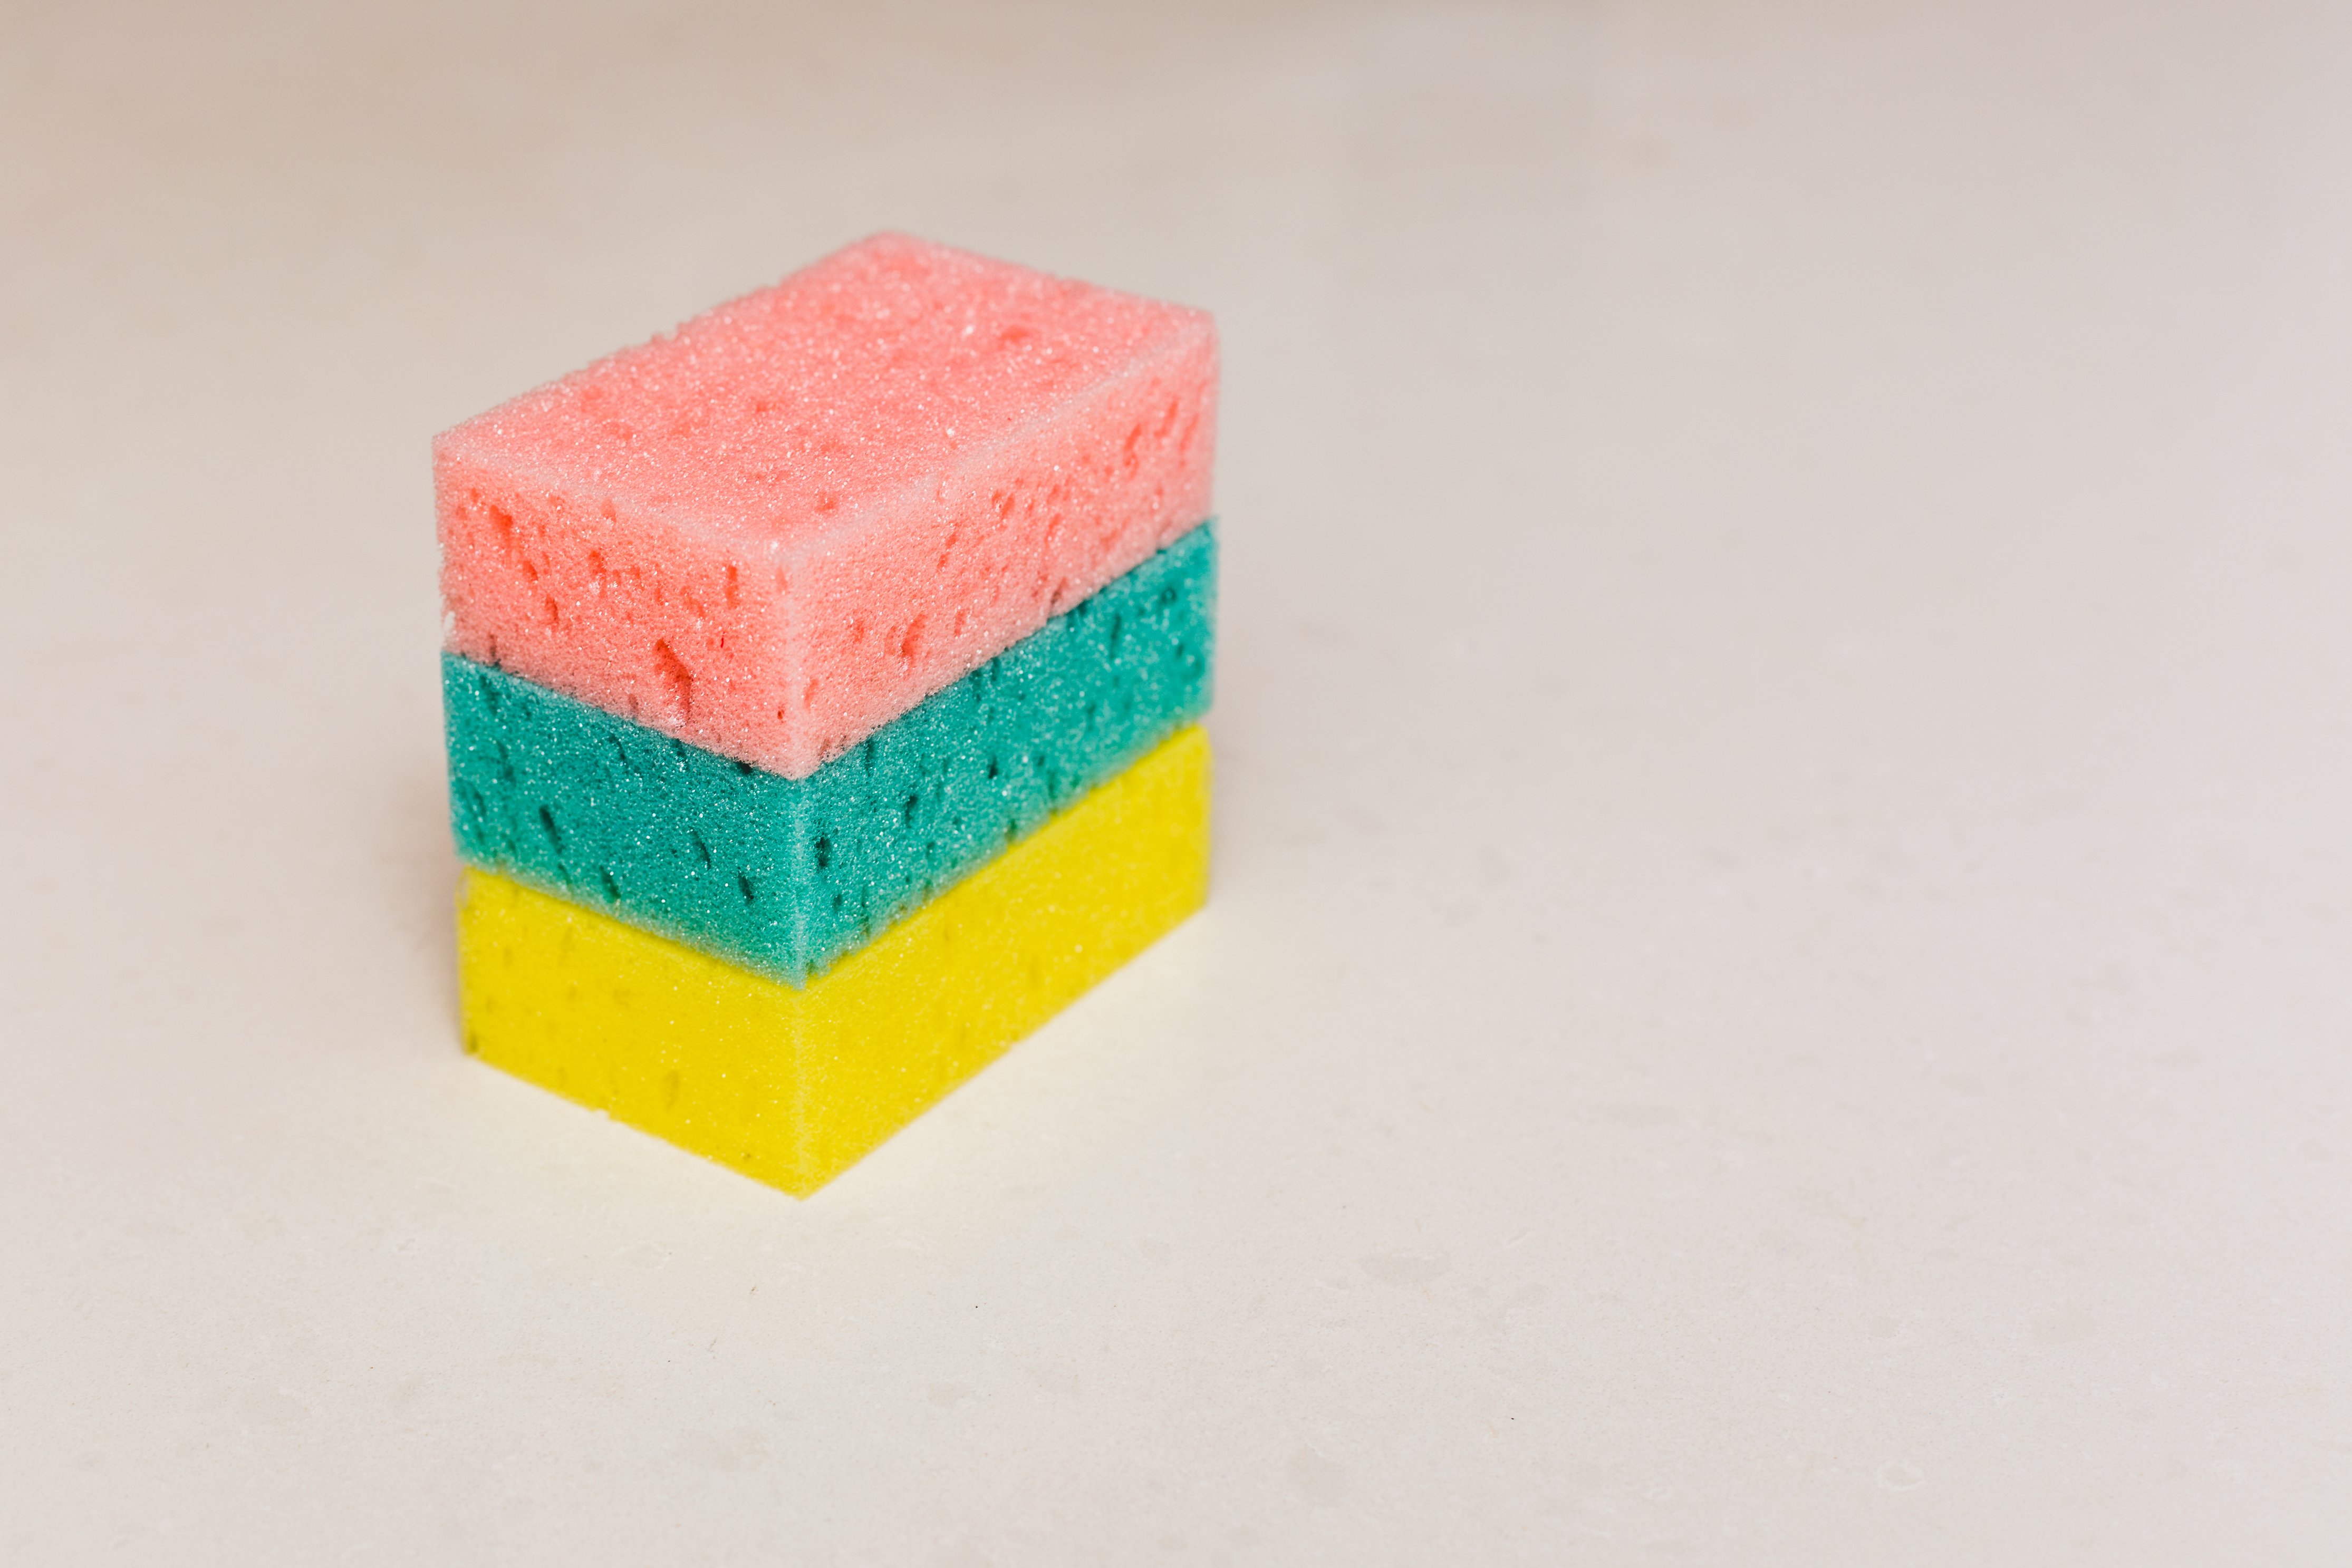 how long to microwave a sponge